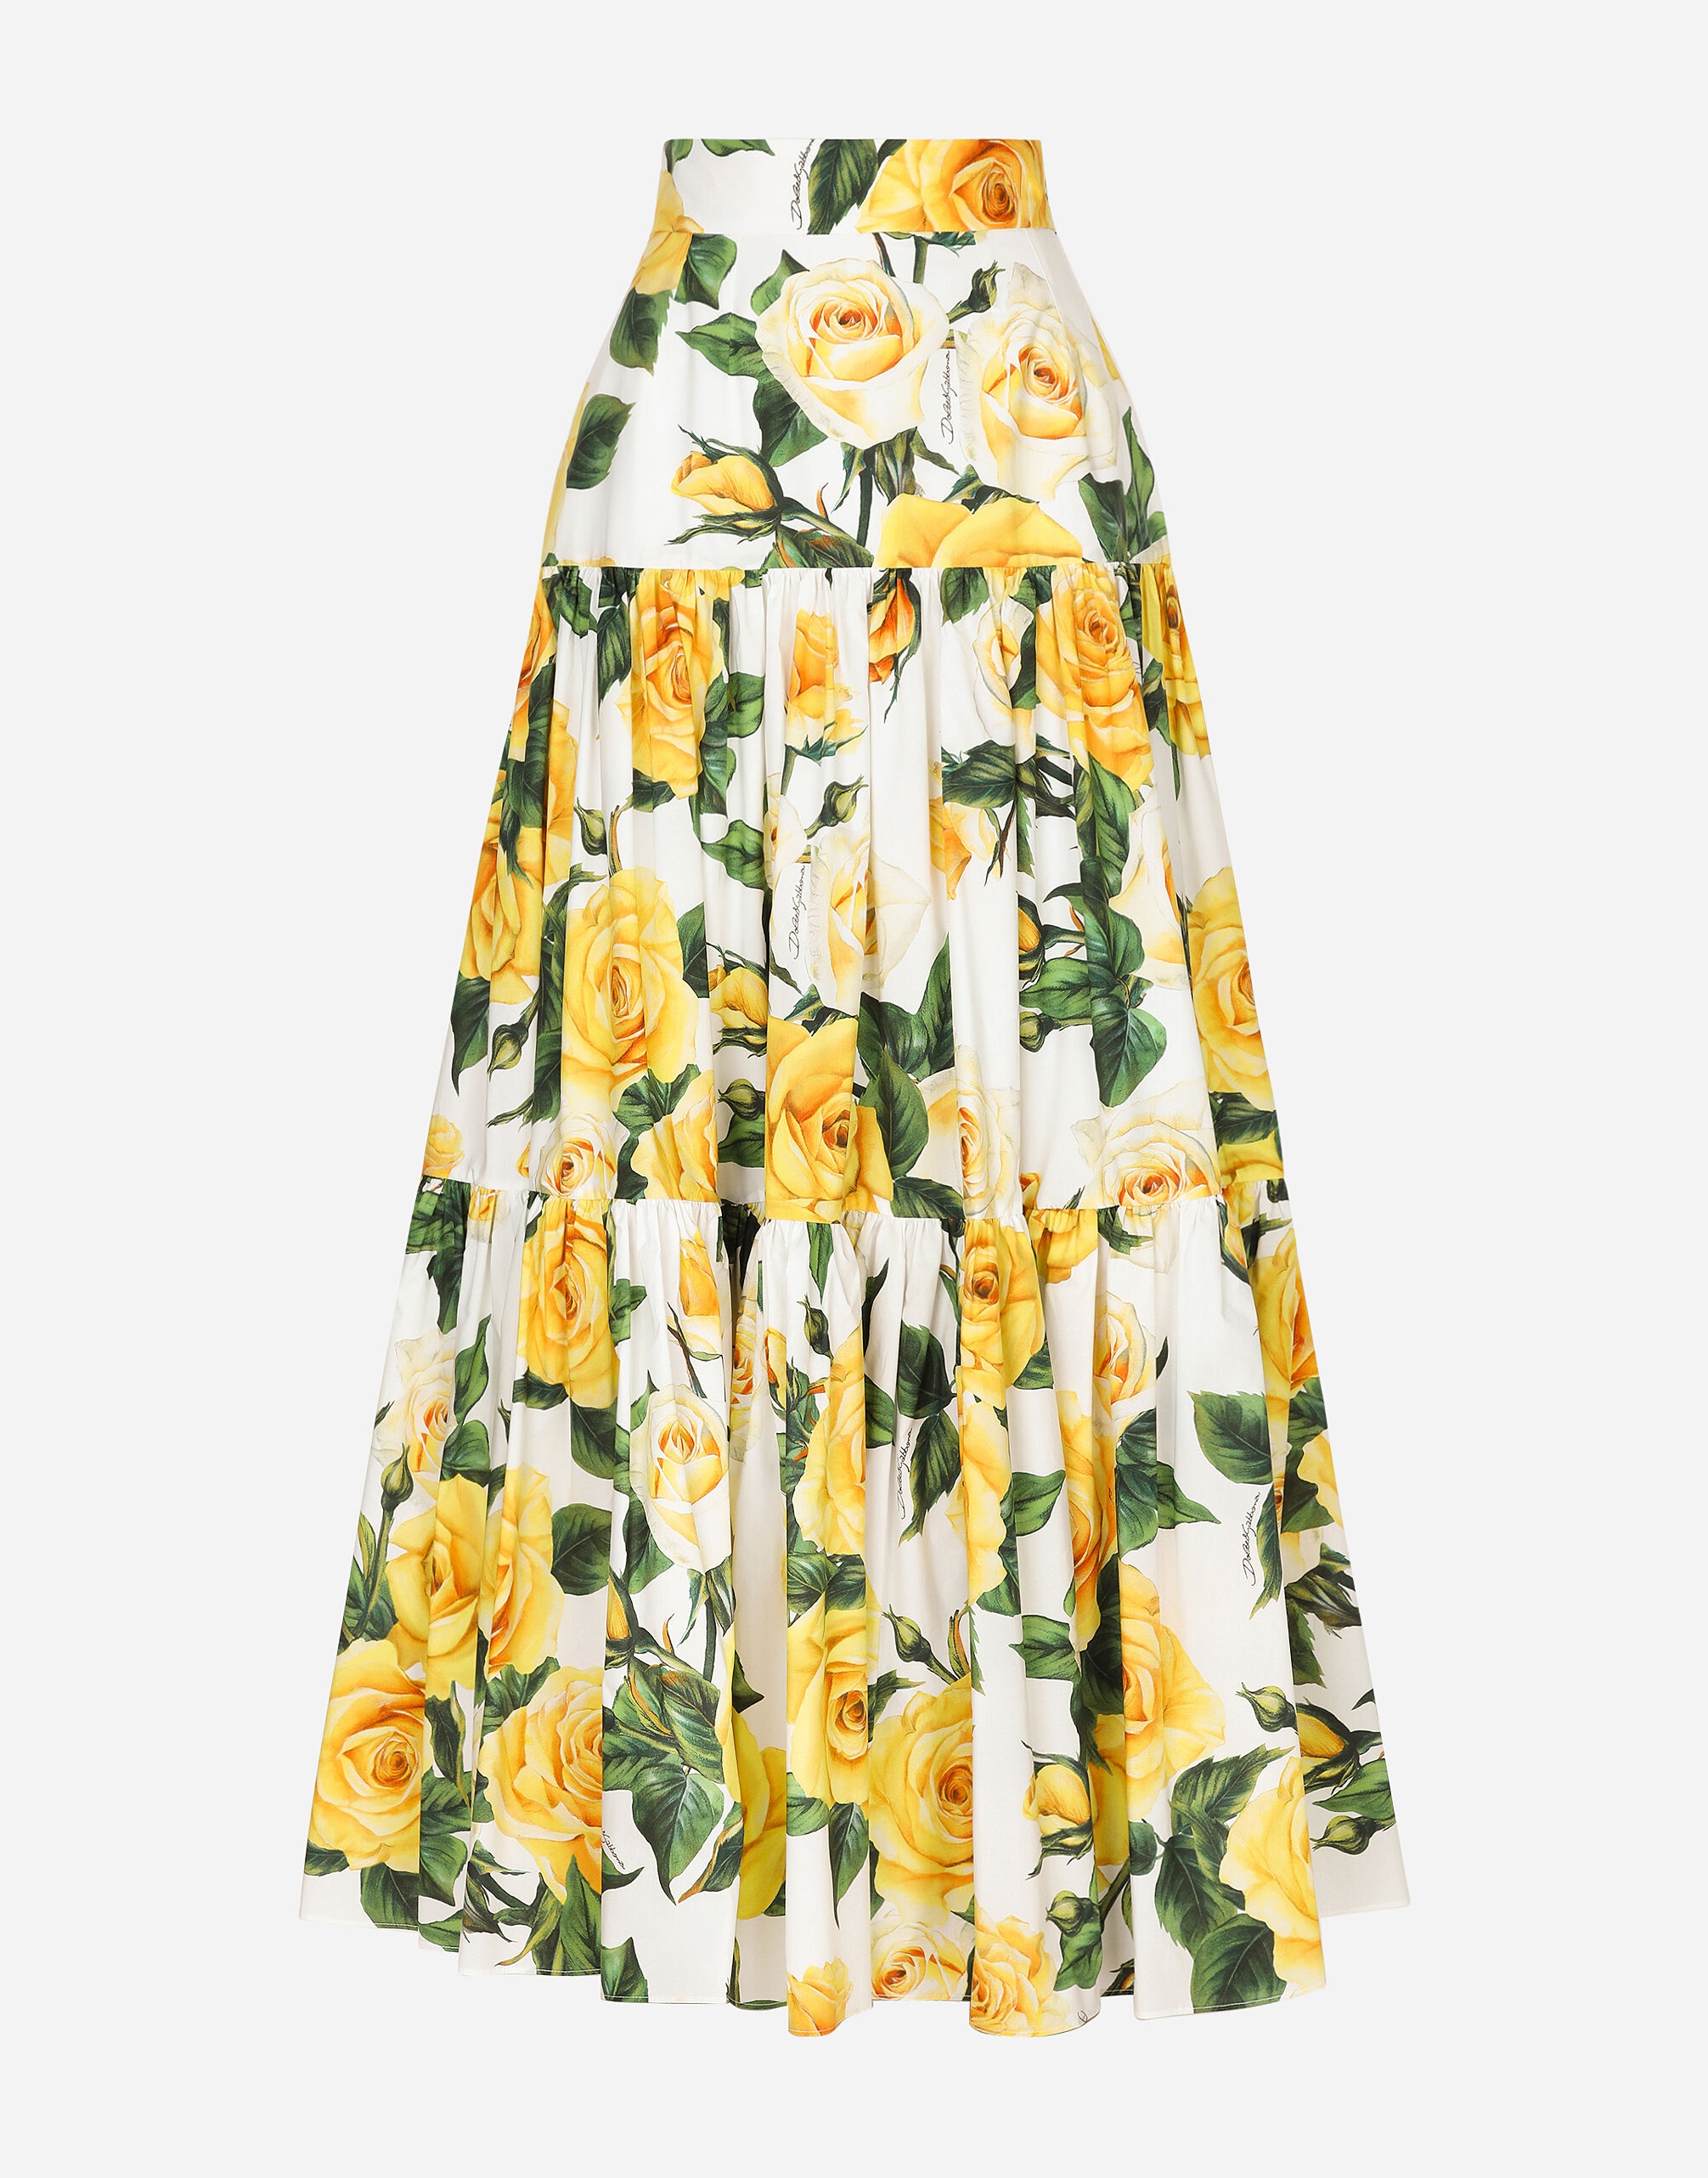 Long ruffled skirt in yellow rose-print cotton - 1